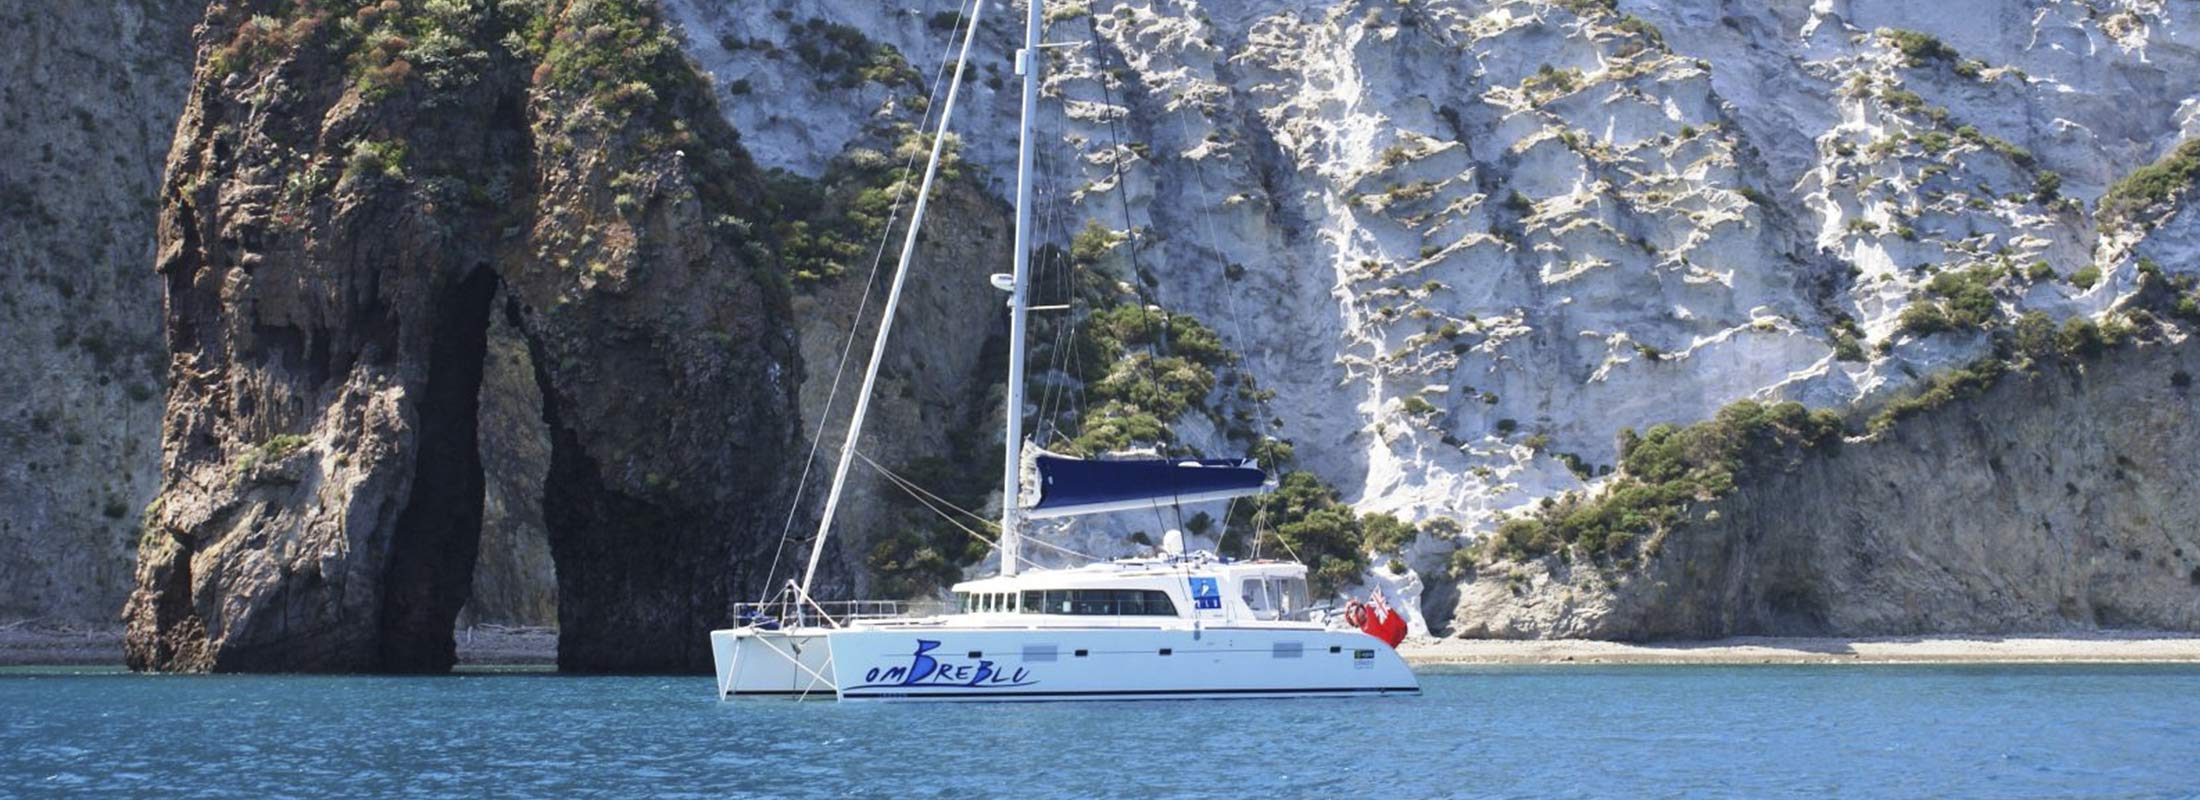 Ombre Blu Sailing Yacht for Charter Mediterranean slider 1